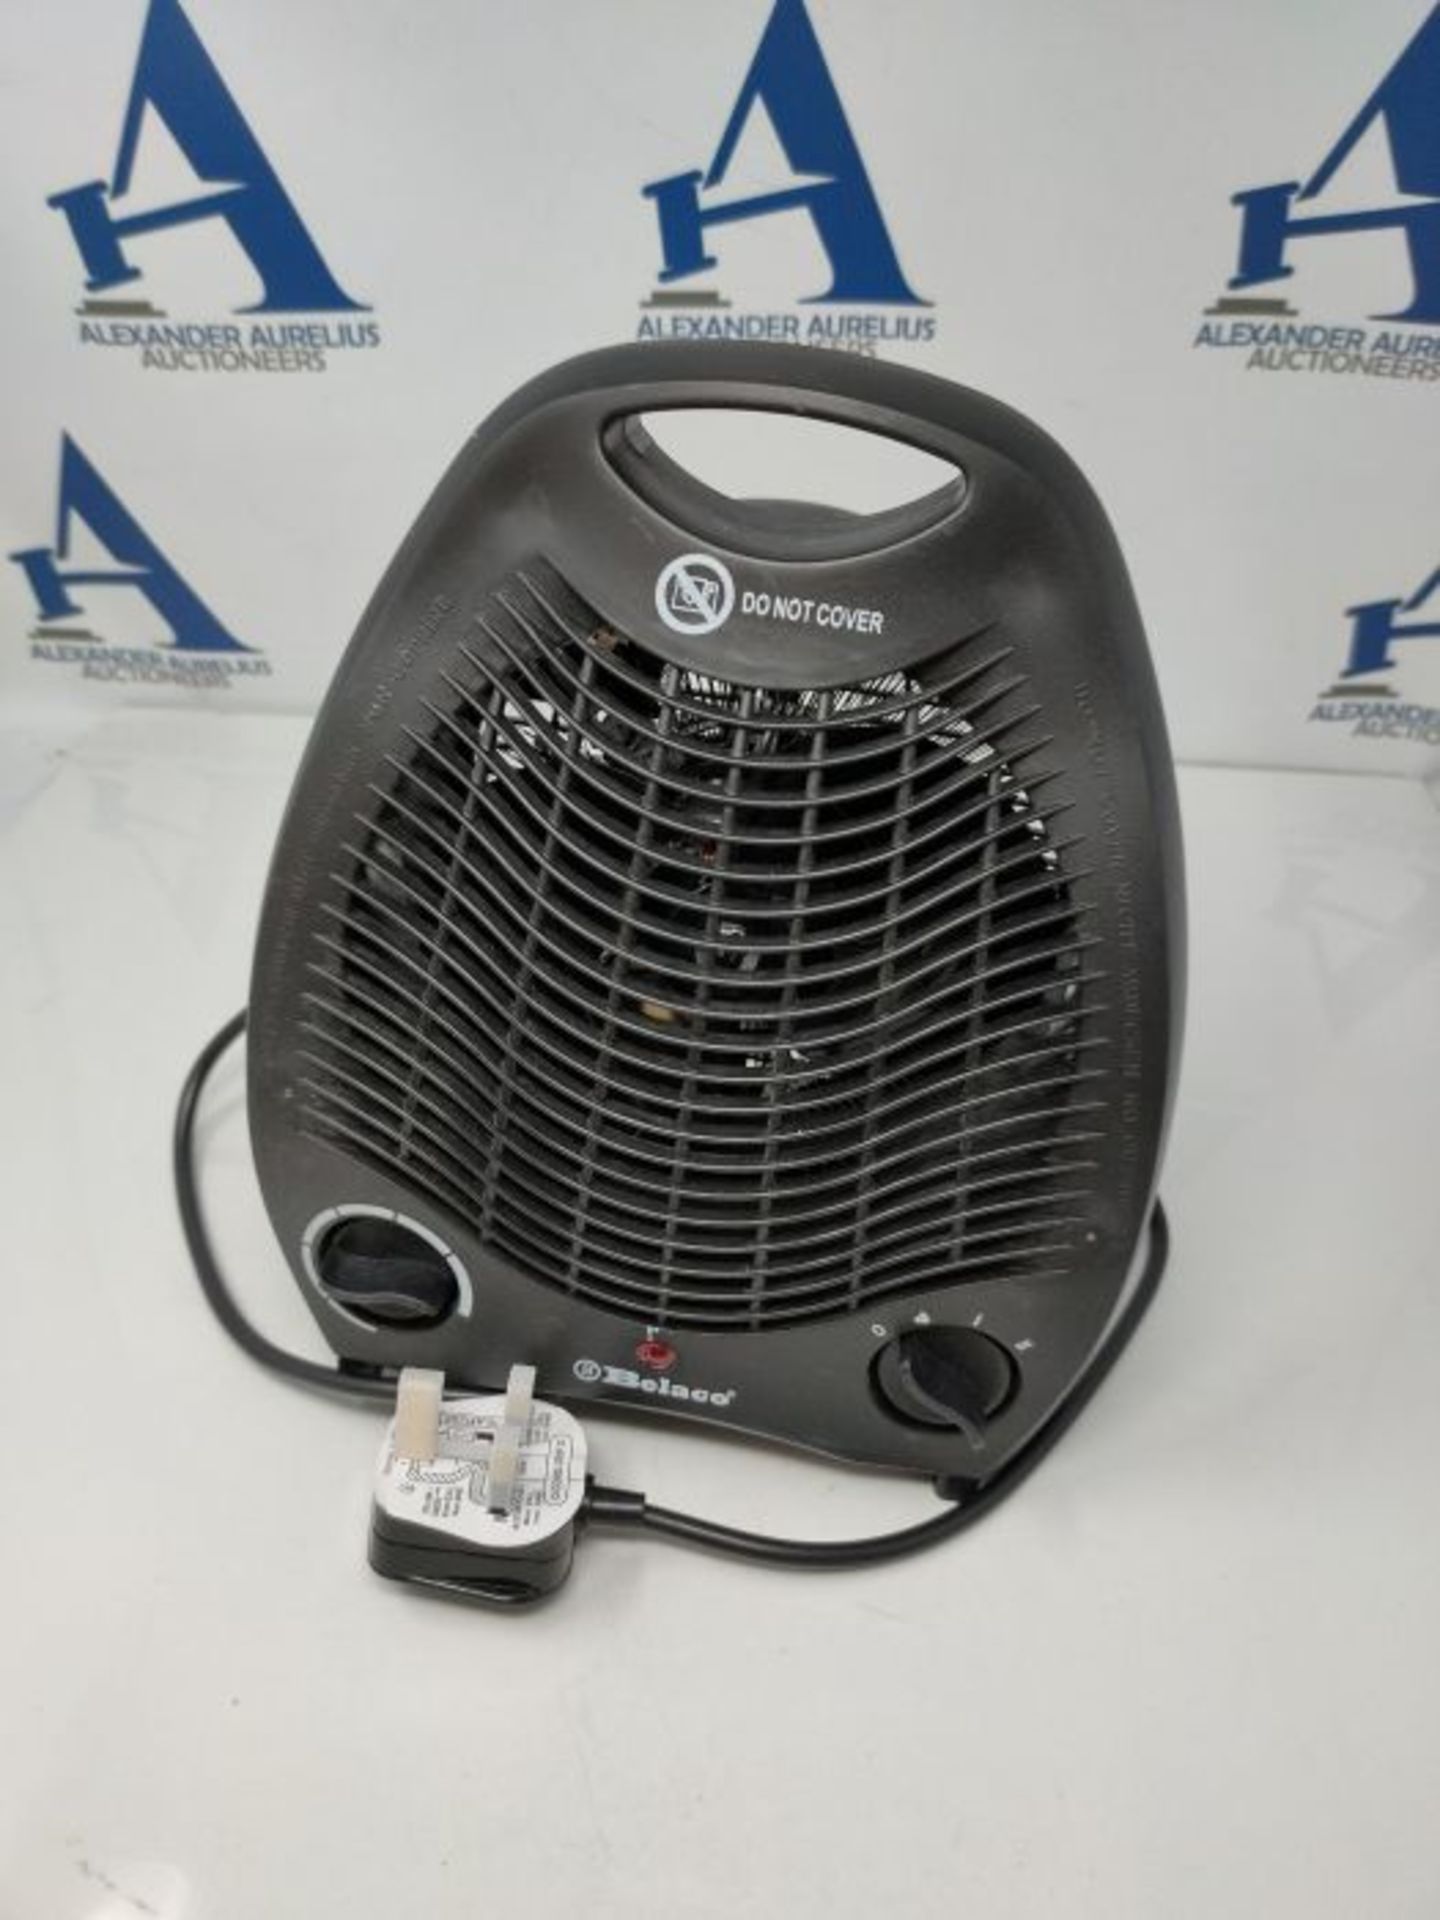 Belaco Fan Heater 2 Heat Settings 1000/2000W Electric Heaters Overheat Protection BFH2 - Image 2 of 2